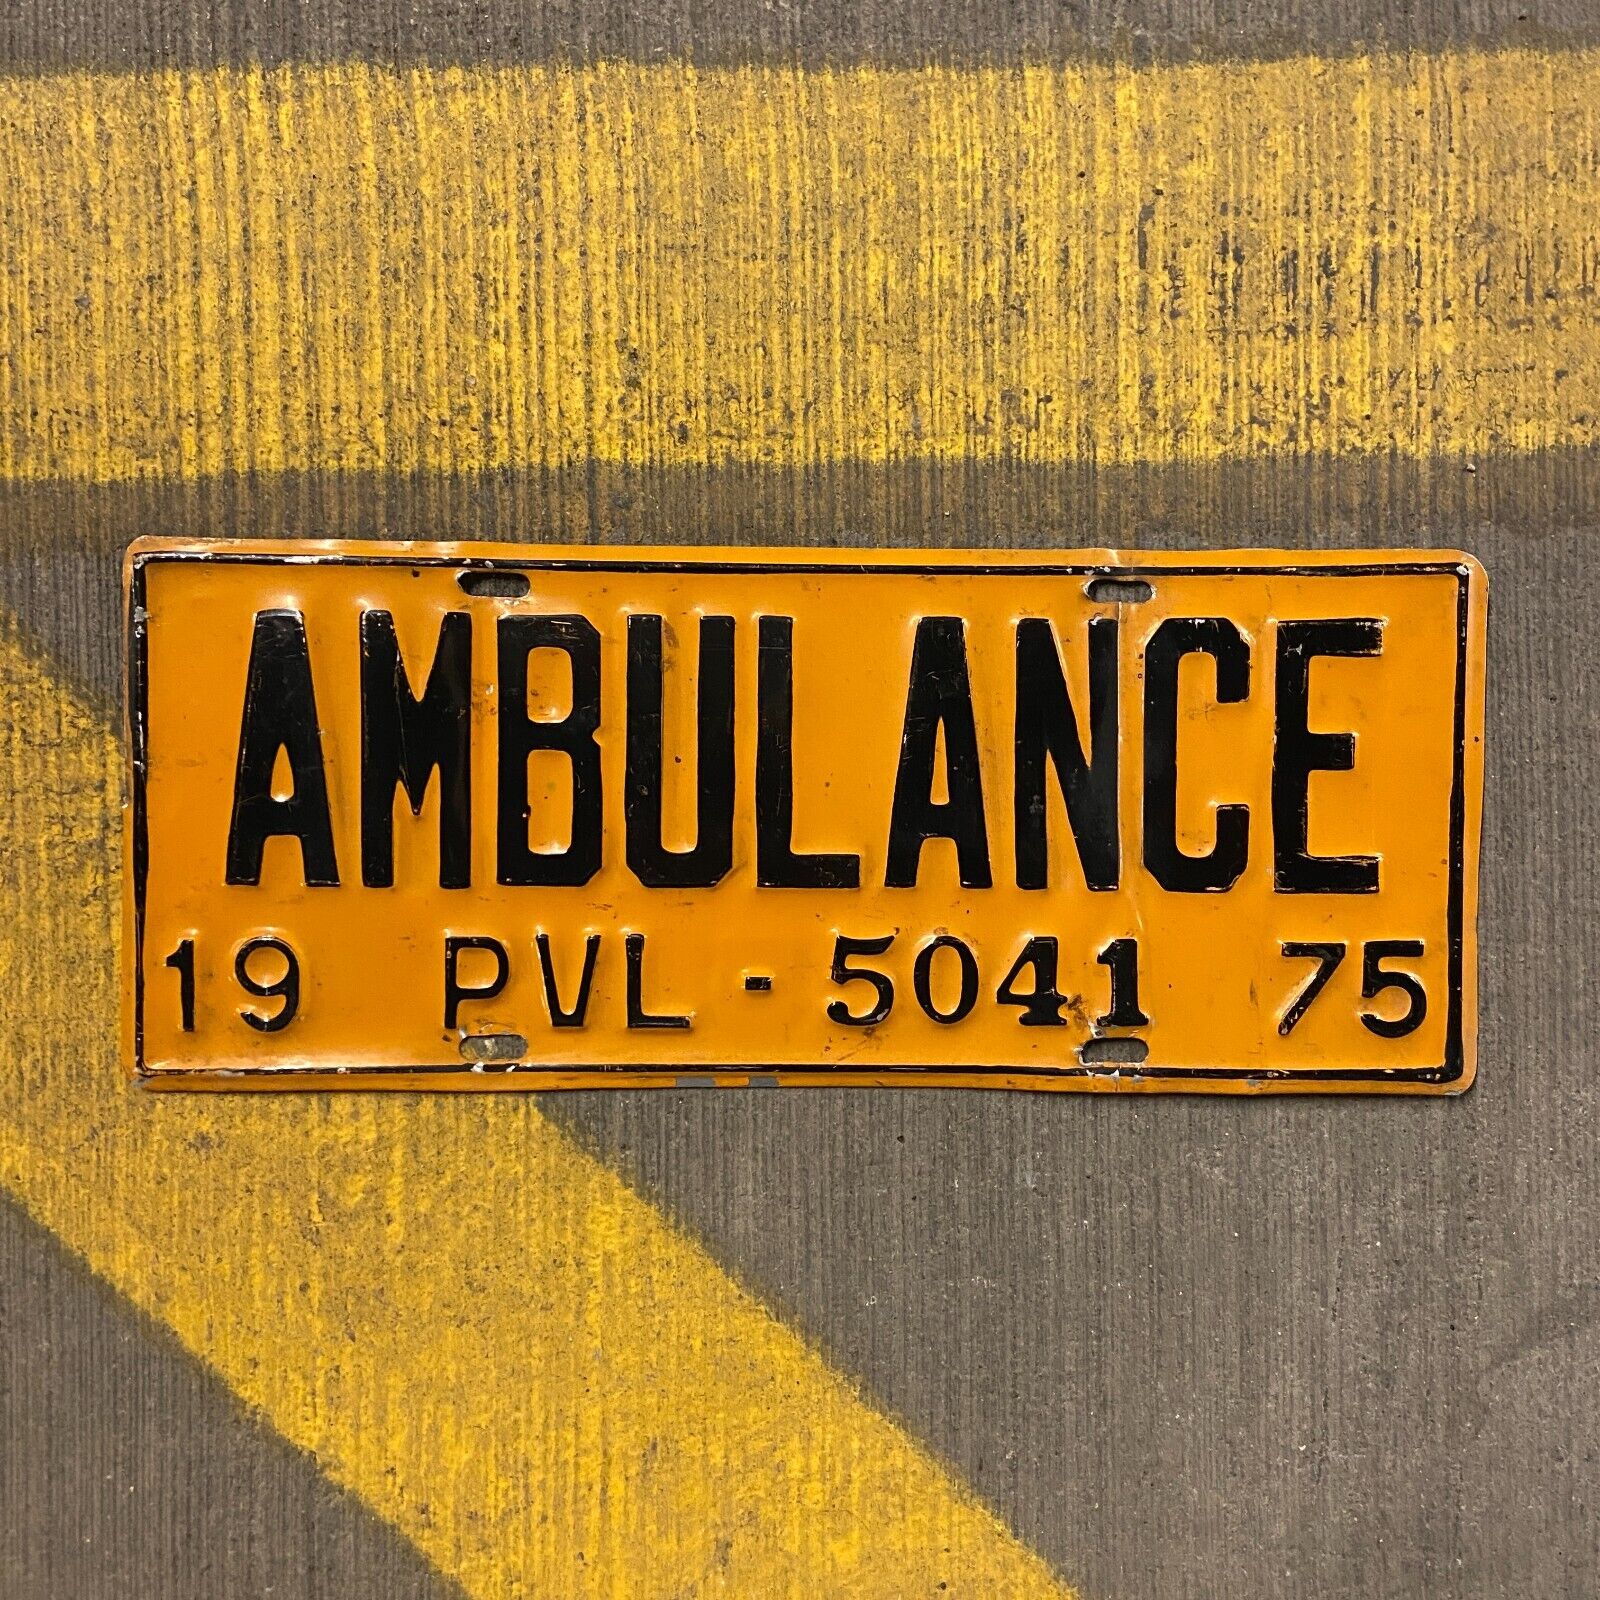 1975 Local Chicago Ambulance Illinois License Plate Auto Garage PVL 5041 LARGE